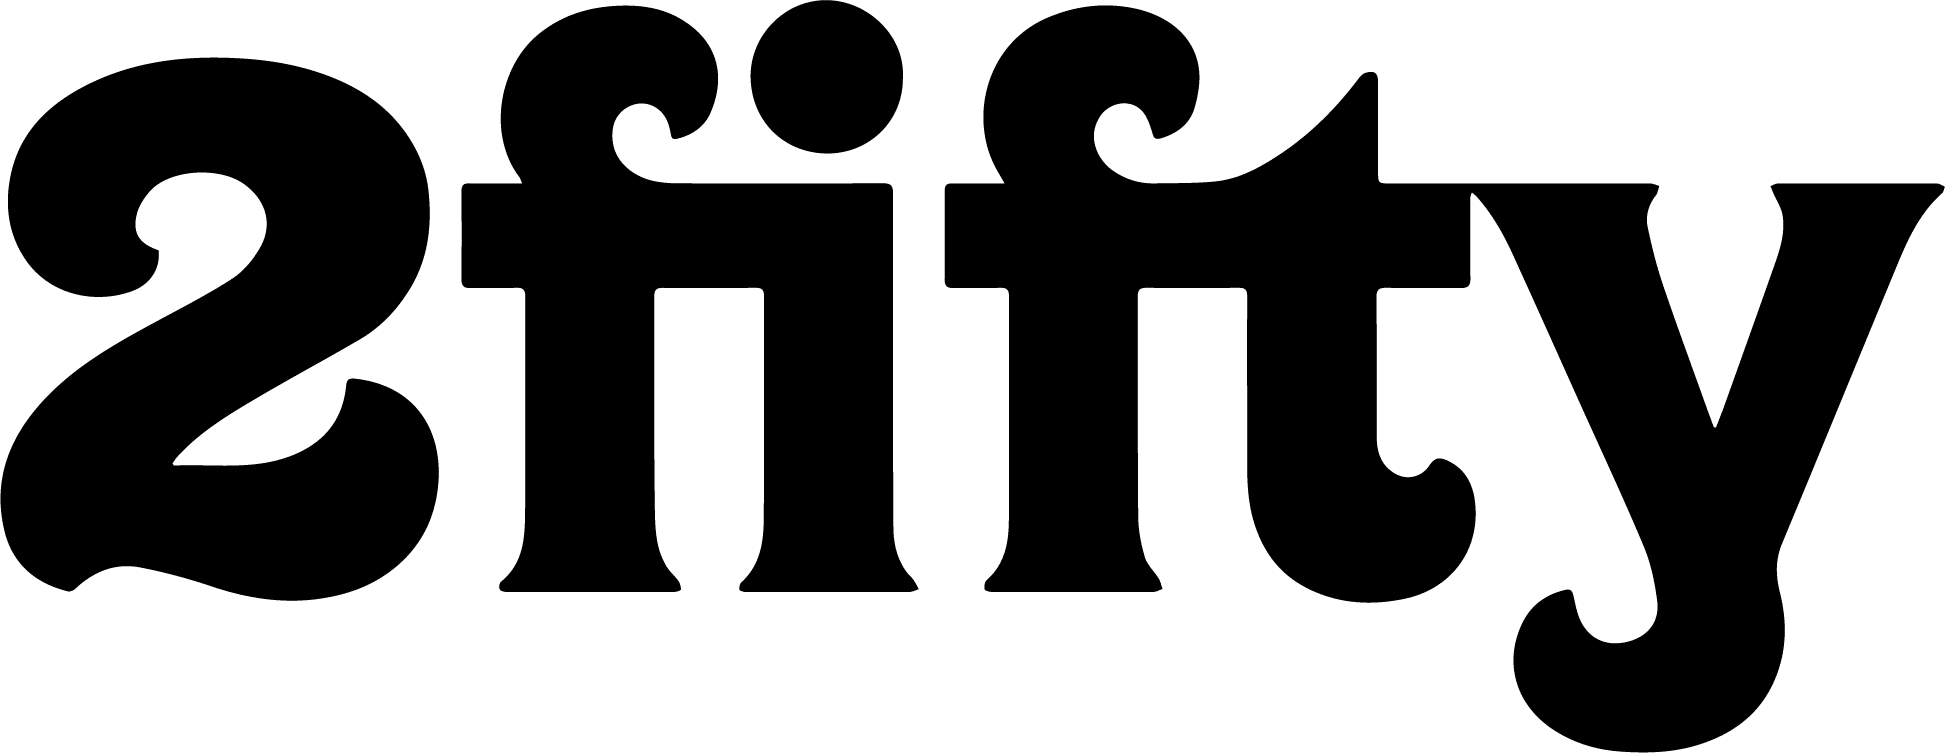 2Fiftys logo